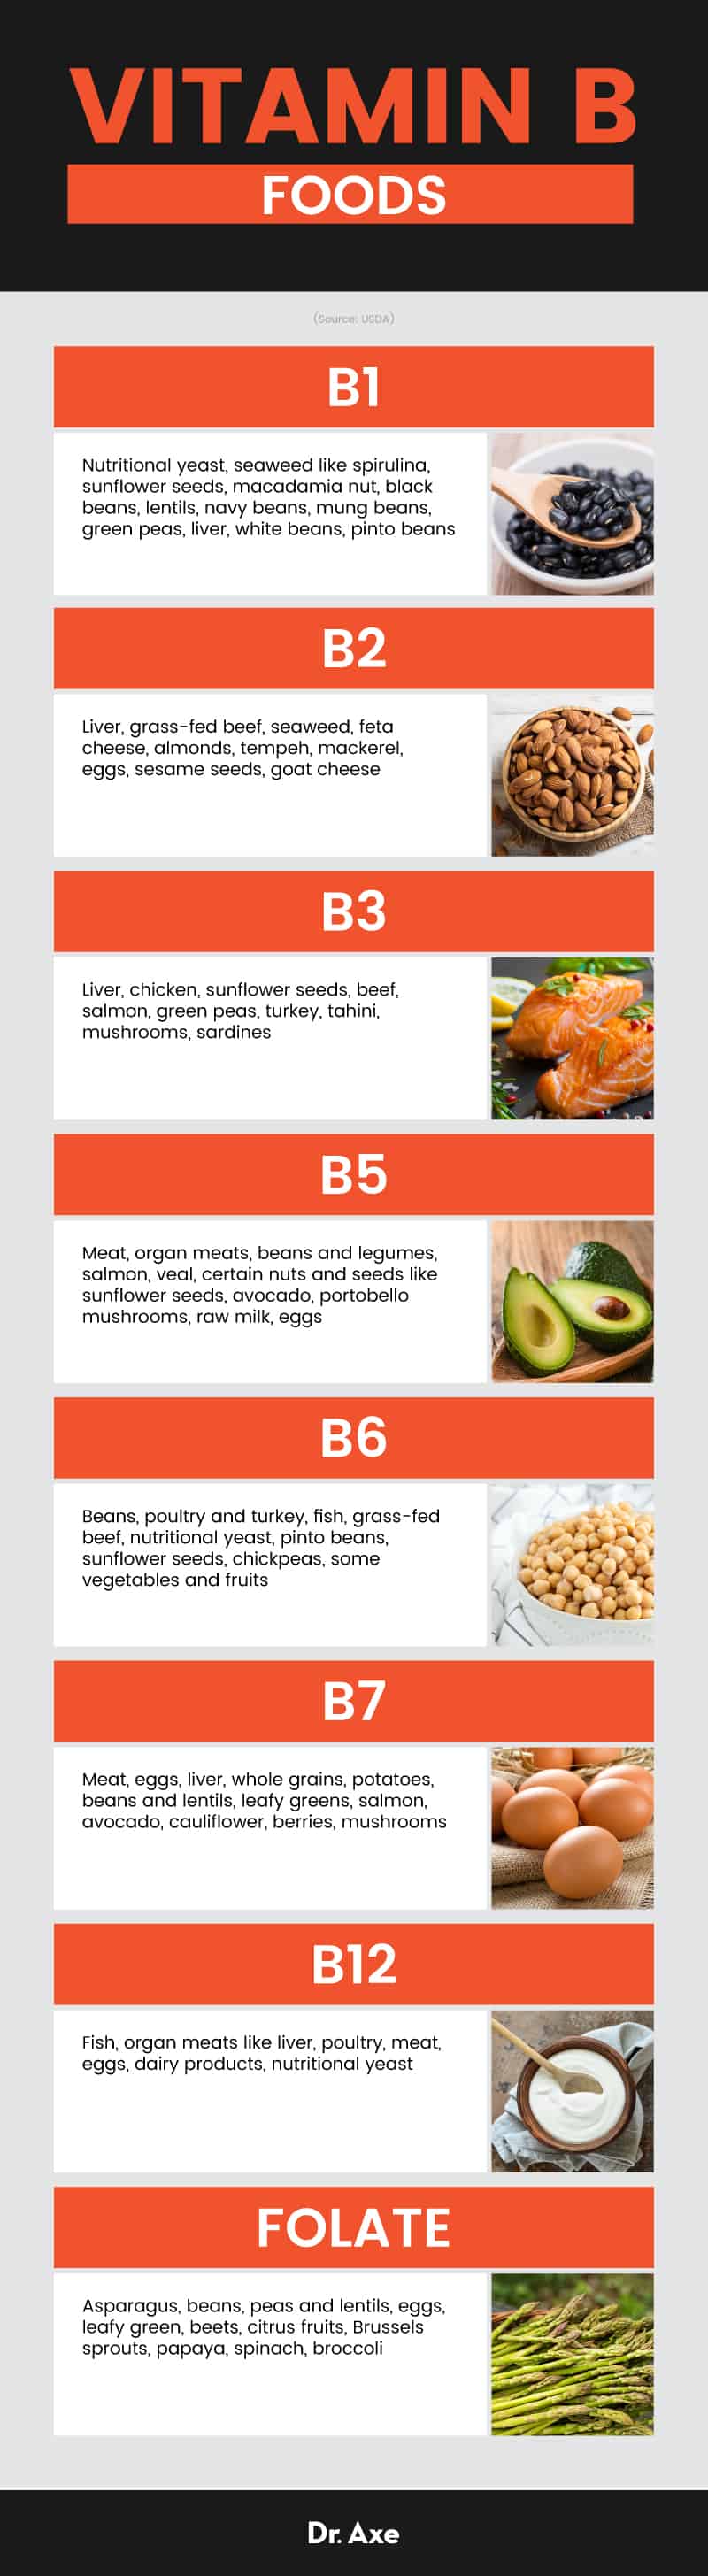 Vitamin B foods - Dr. Axe